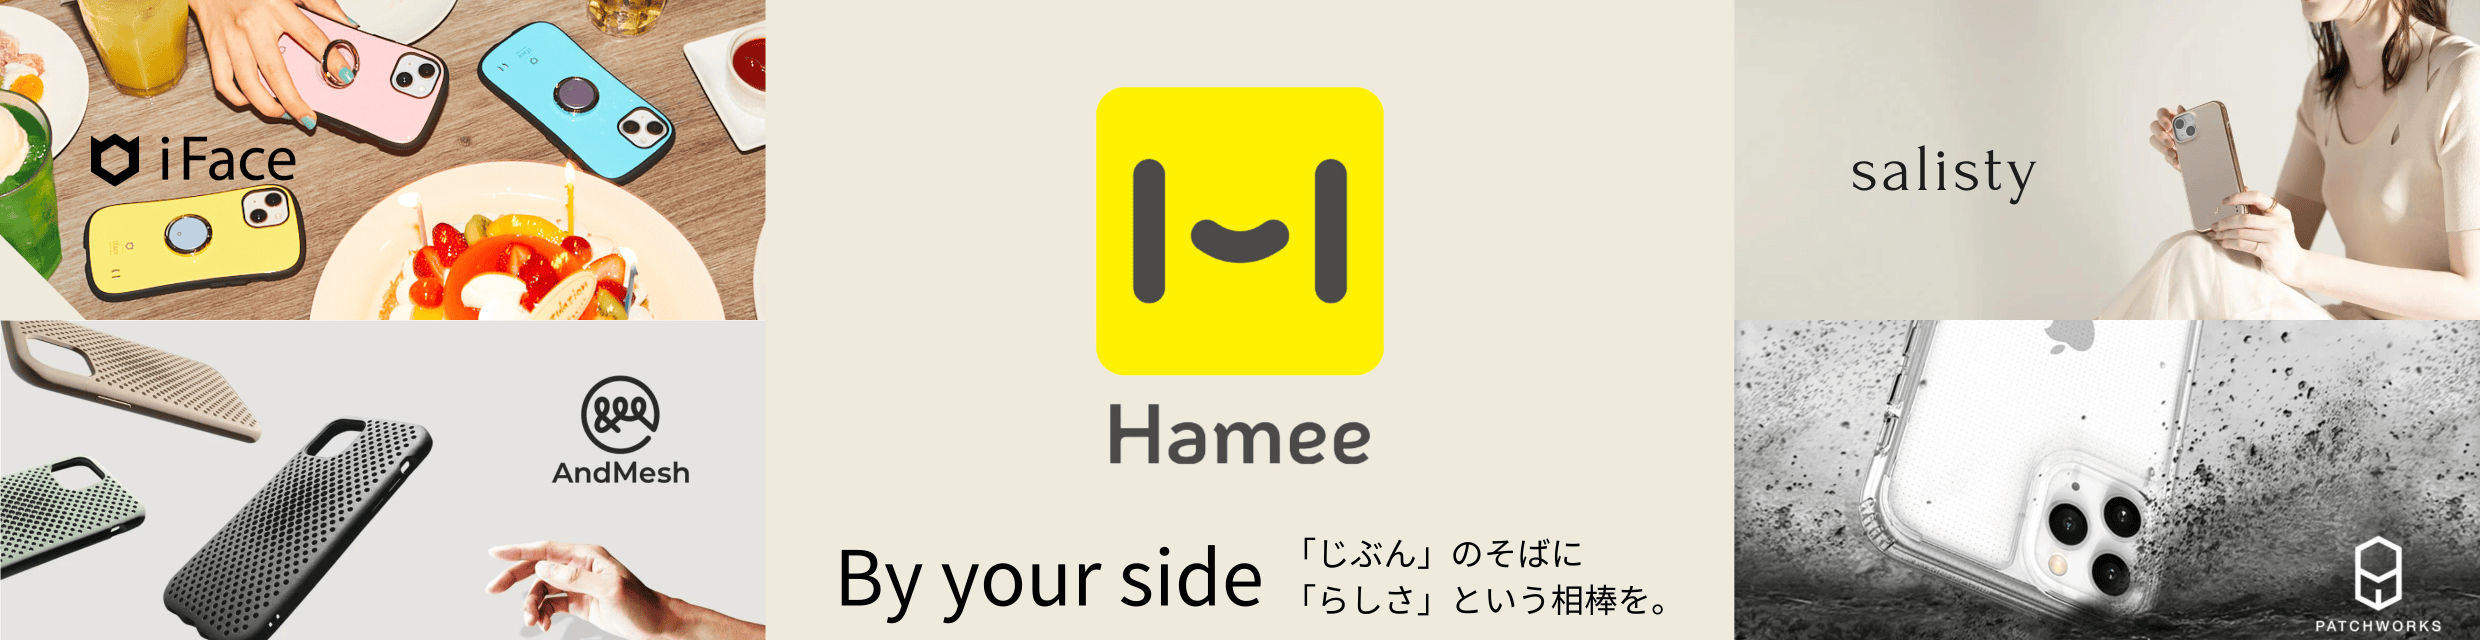 Hamee 詳細情報